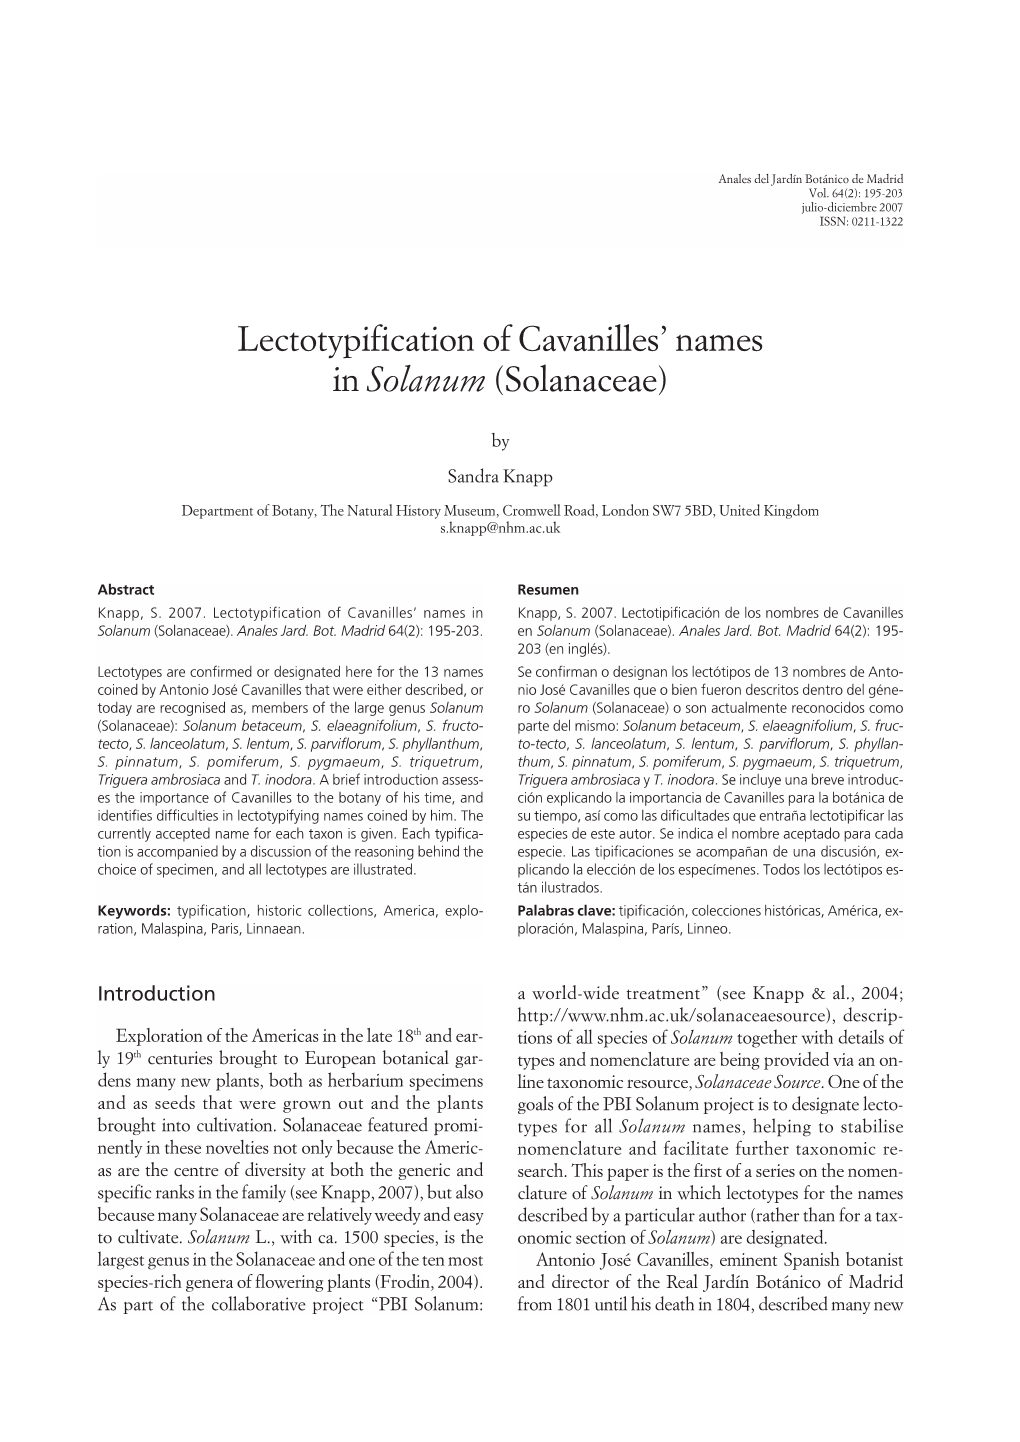 Lectotypification of Cavanilles' Names in Solanum